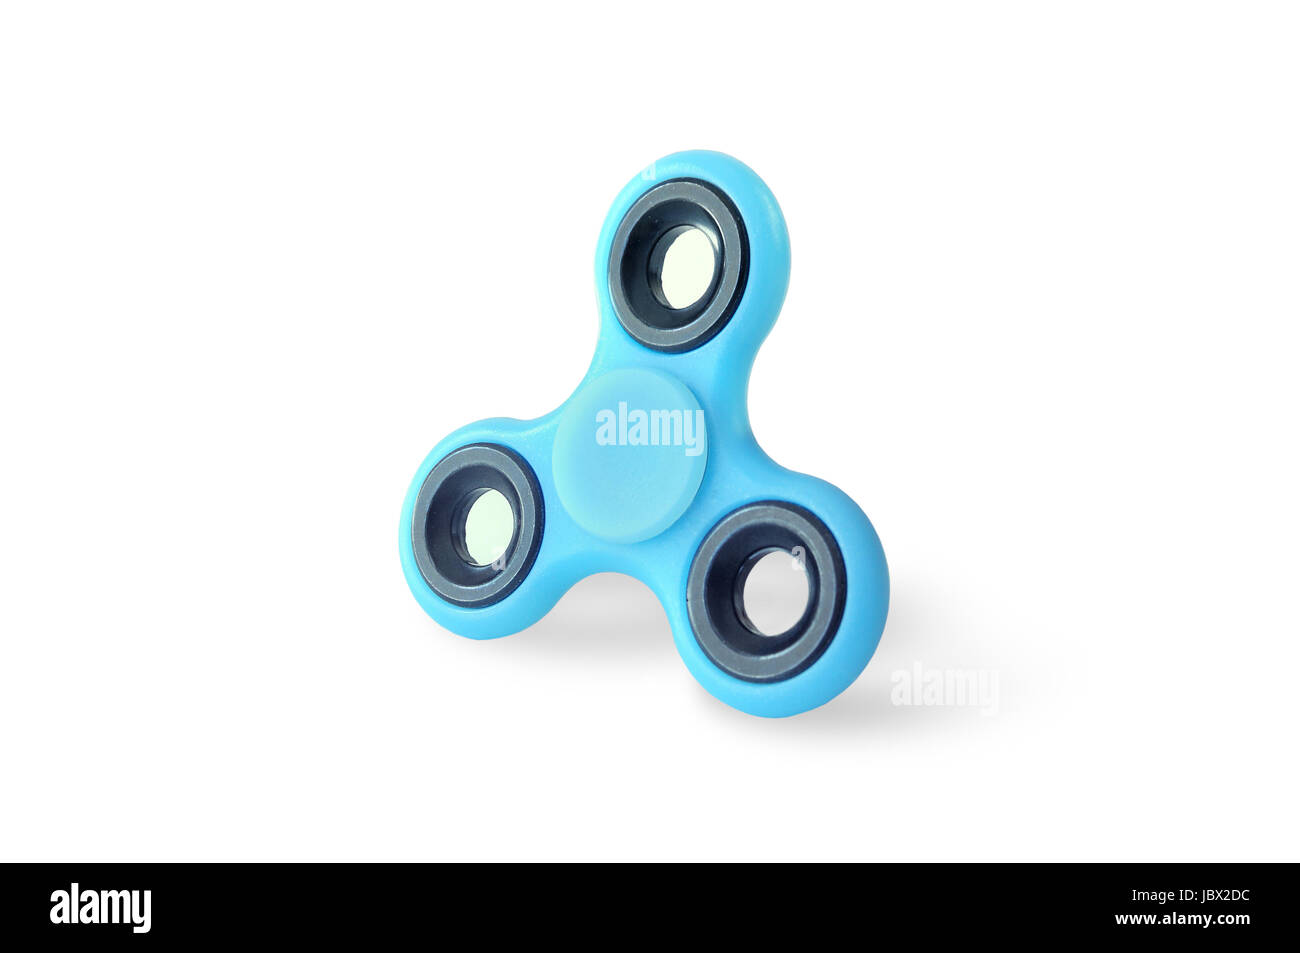 Blue fidget spinner popular toy on white background Stock Photo